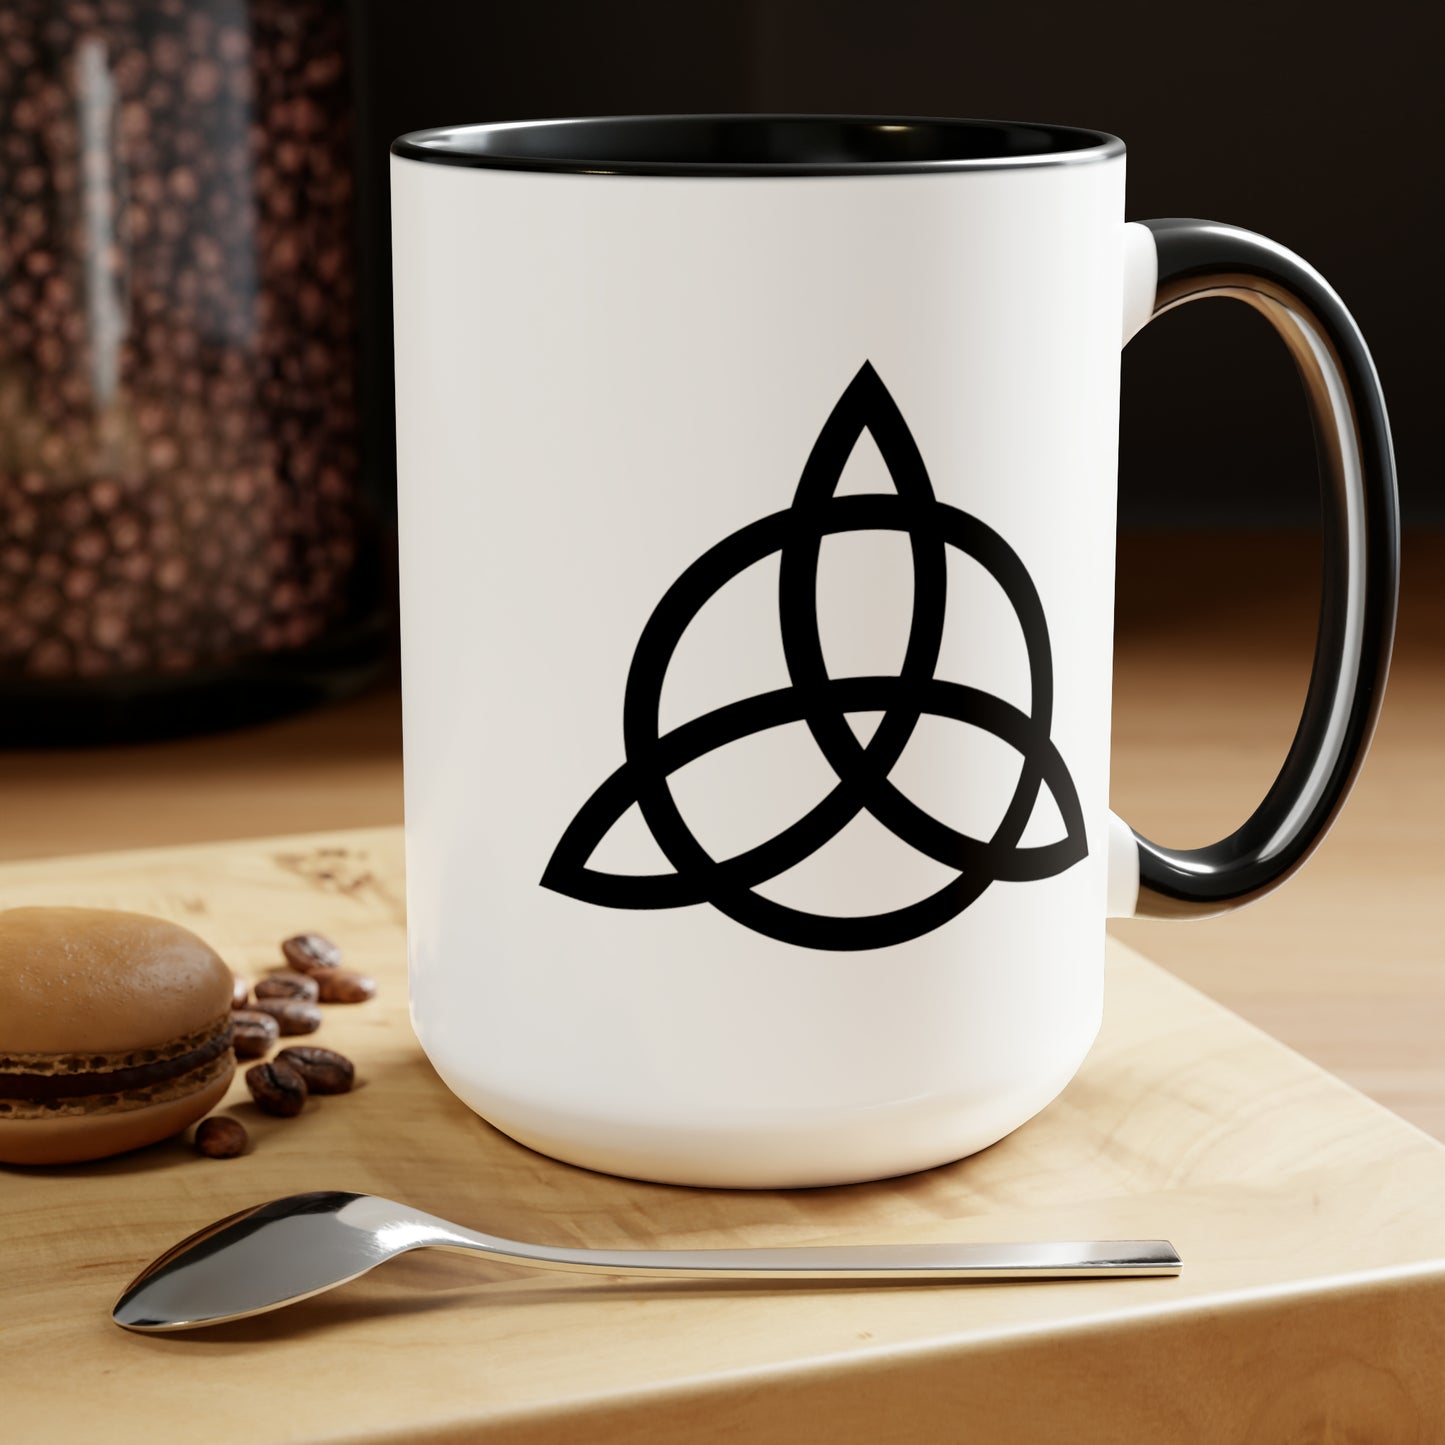 John Paul Jones Led Zeppelin IV Coffee Mug - Double Sided Black Accent White Ceramic 15oz by TheGlassyLass.com